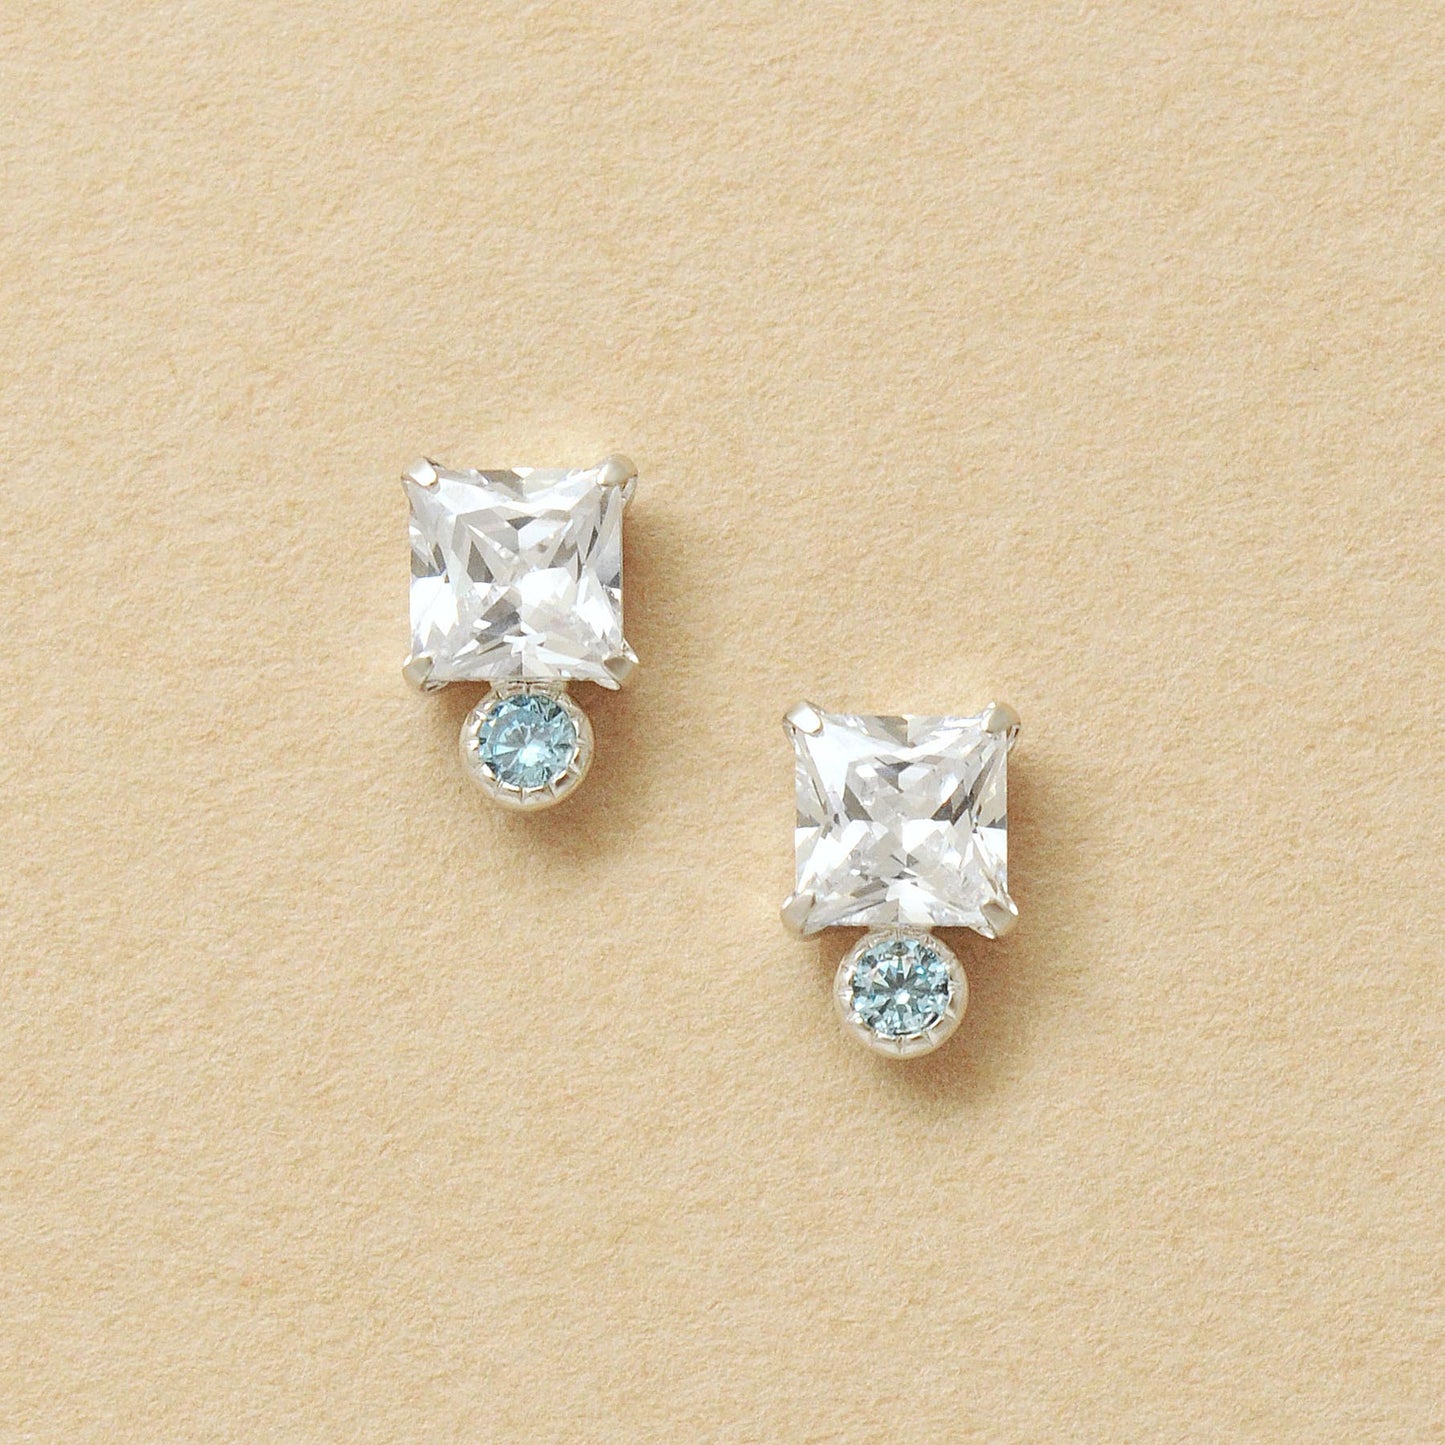 10K Light Blue Color Square Stud Earrings (White Gold) - Product Image